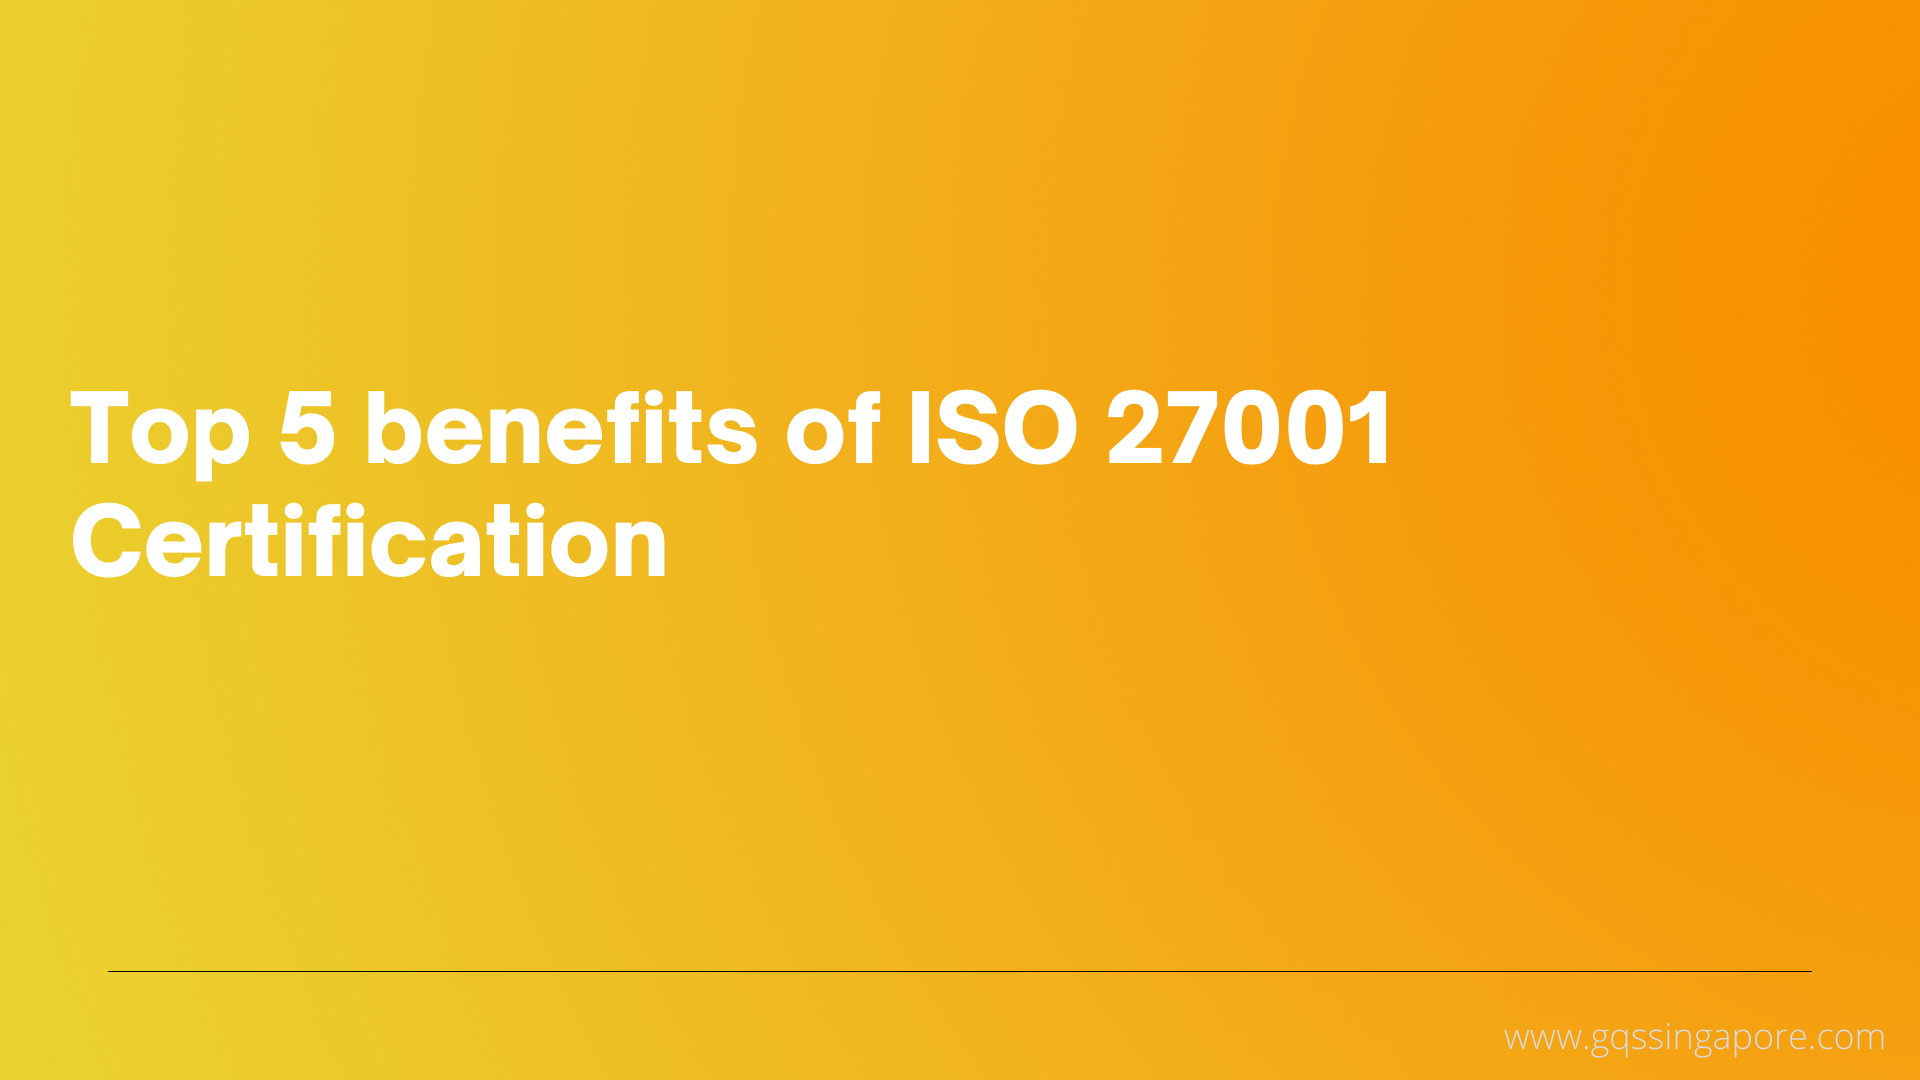 Top 5 benefits of ISO 27001 Certification